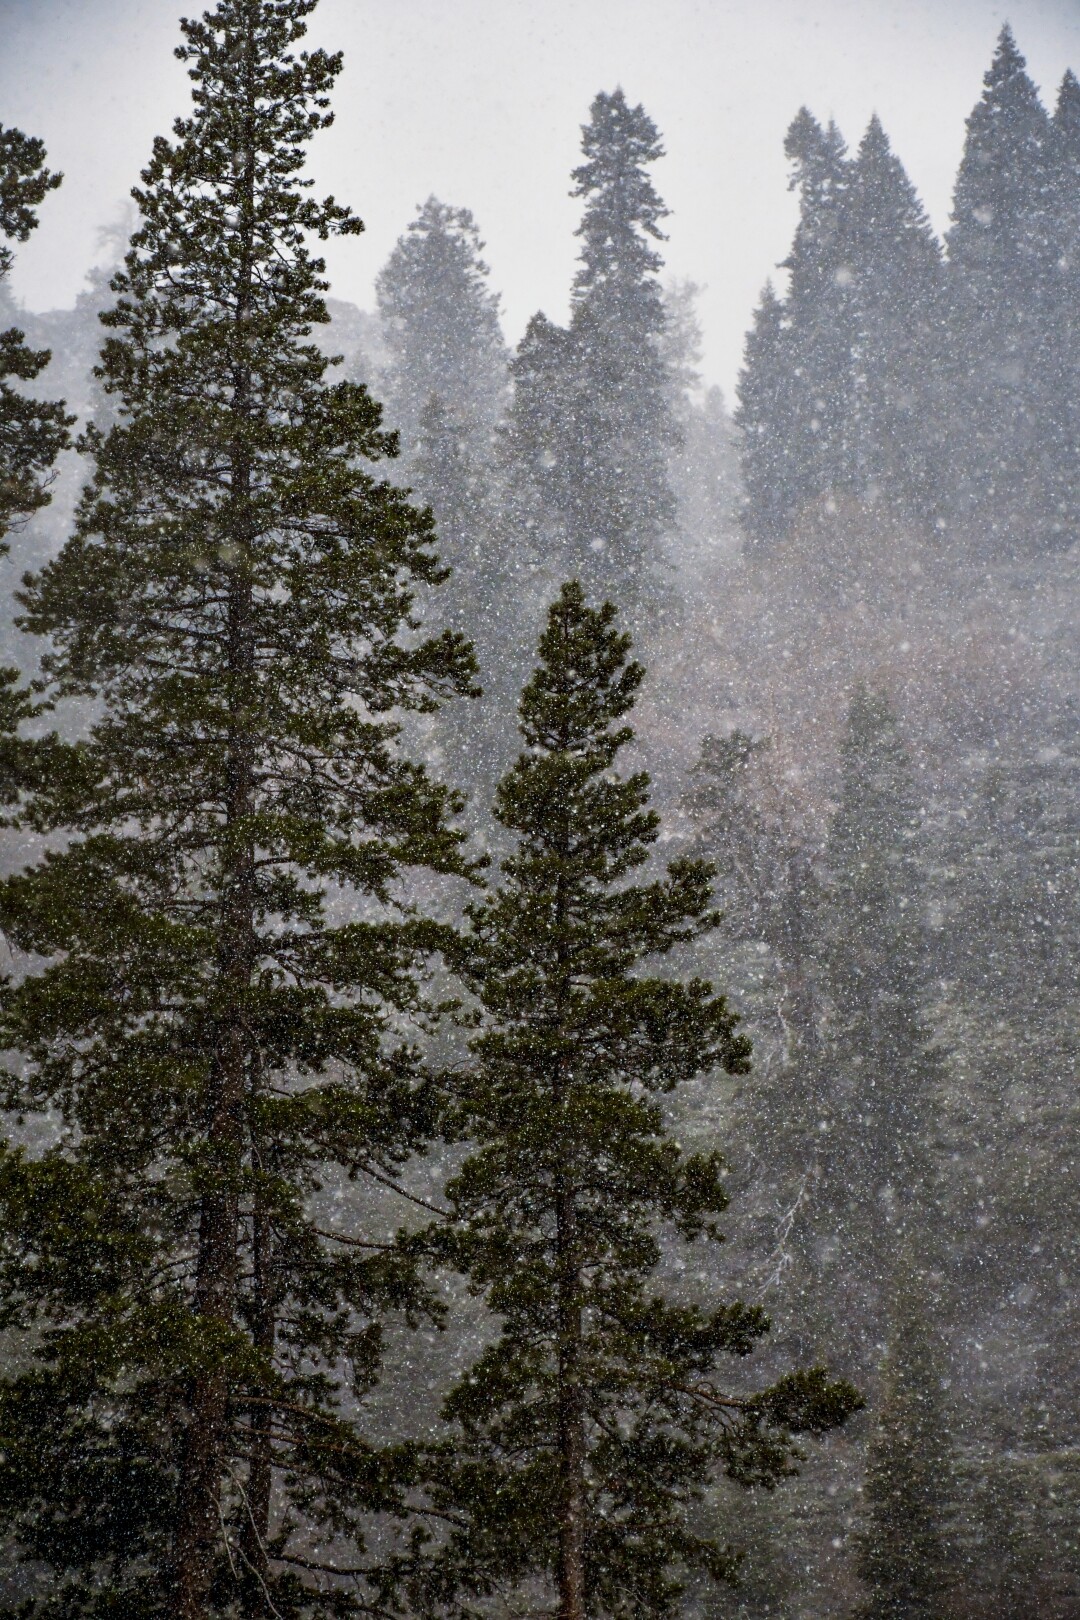 Early season snow falls at Alpine Meadows area of Palisades Tahoe resort near the north shore of Lake Tahoe.